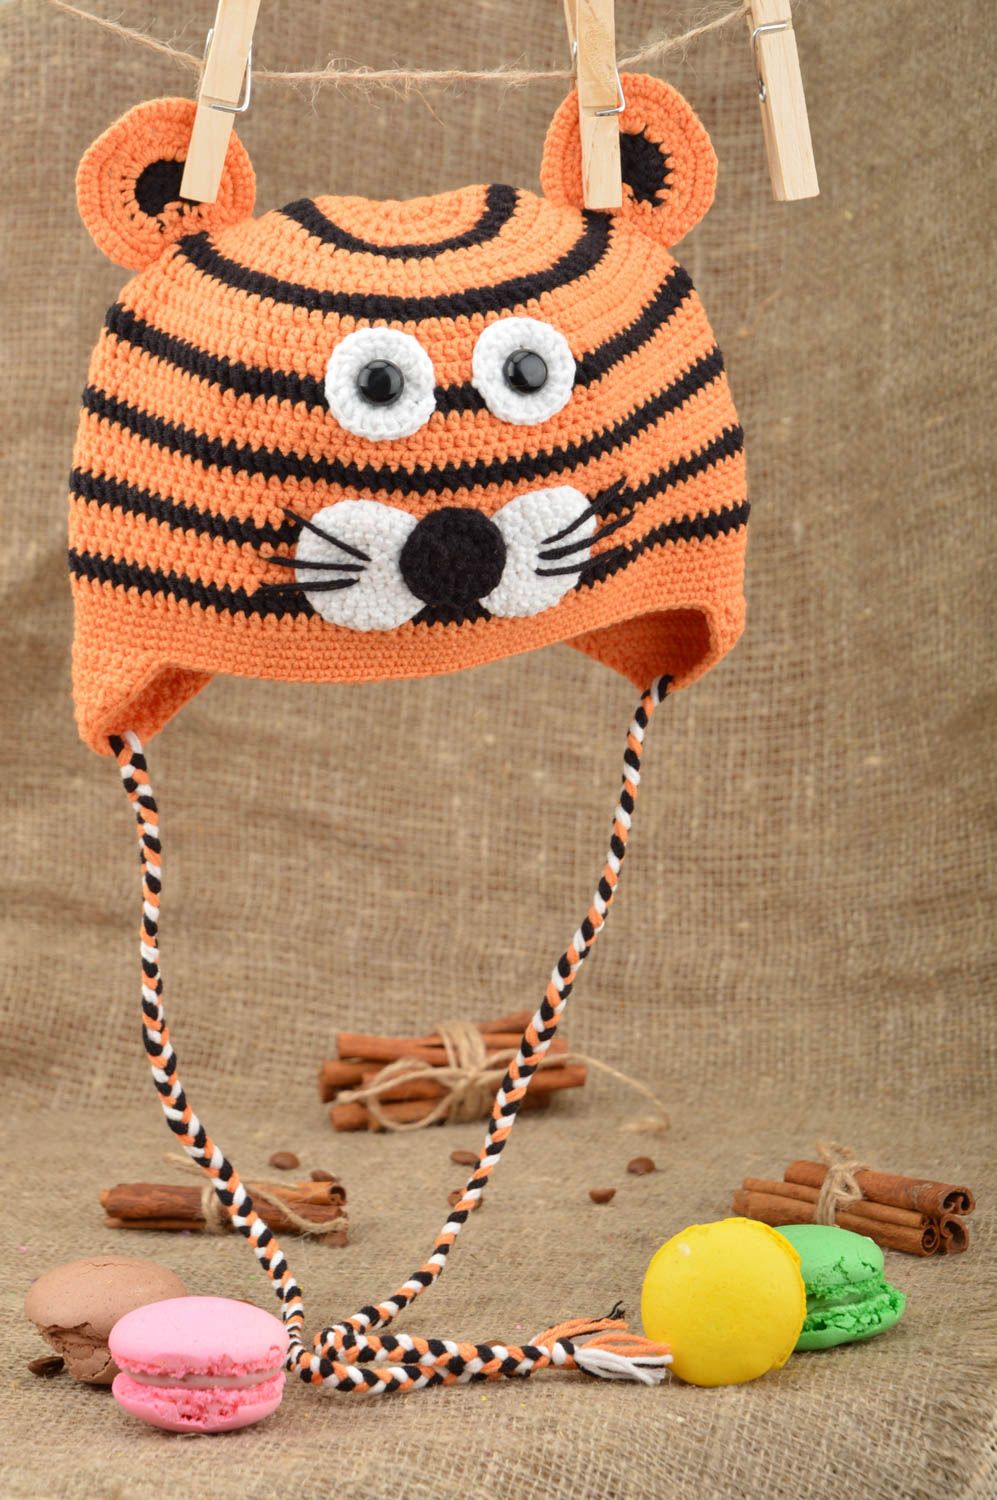 Handmade accessory crochet baby animal hat tiger hat gift ideas for children photo 1